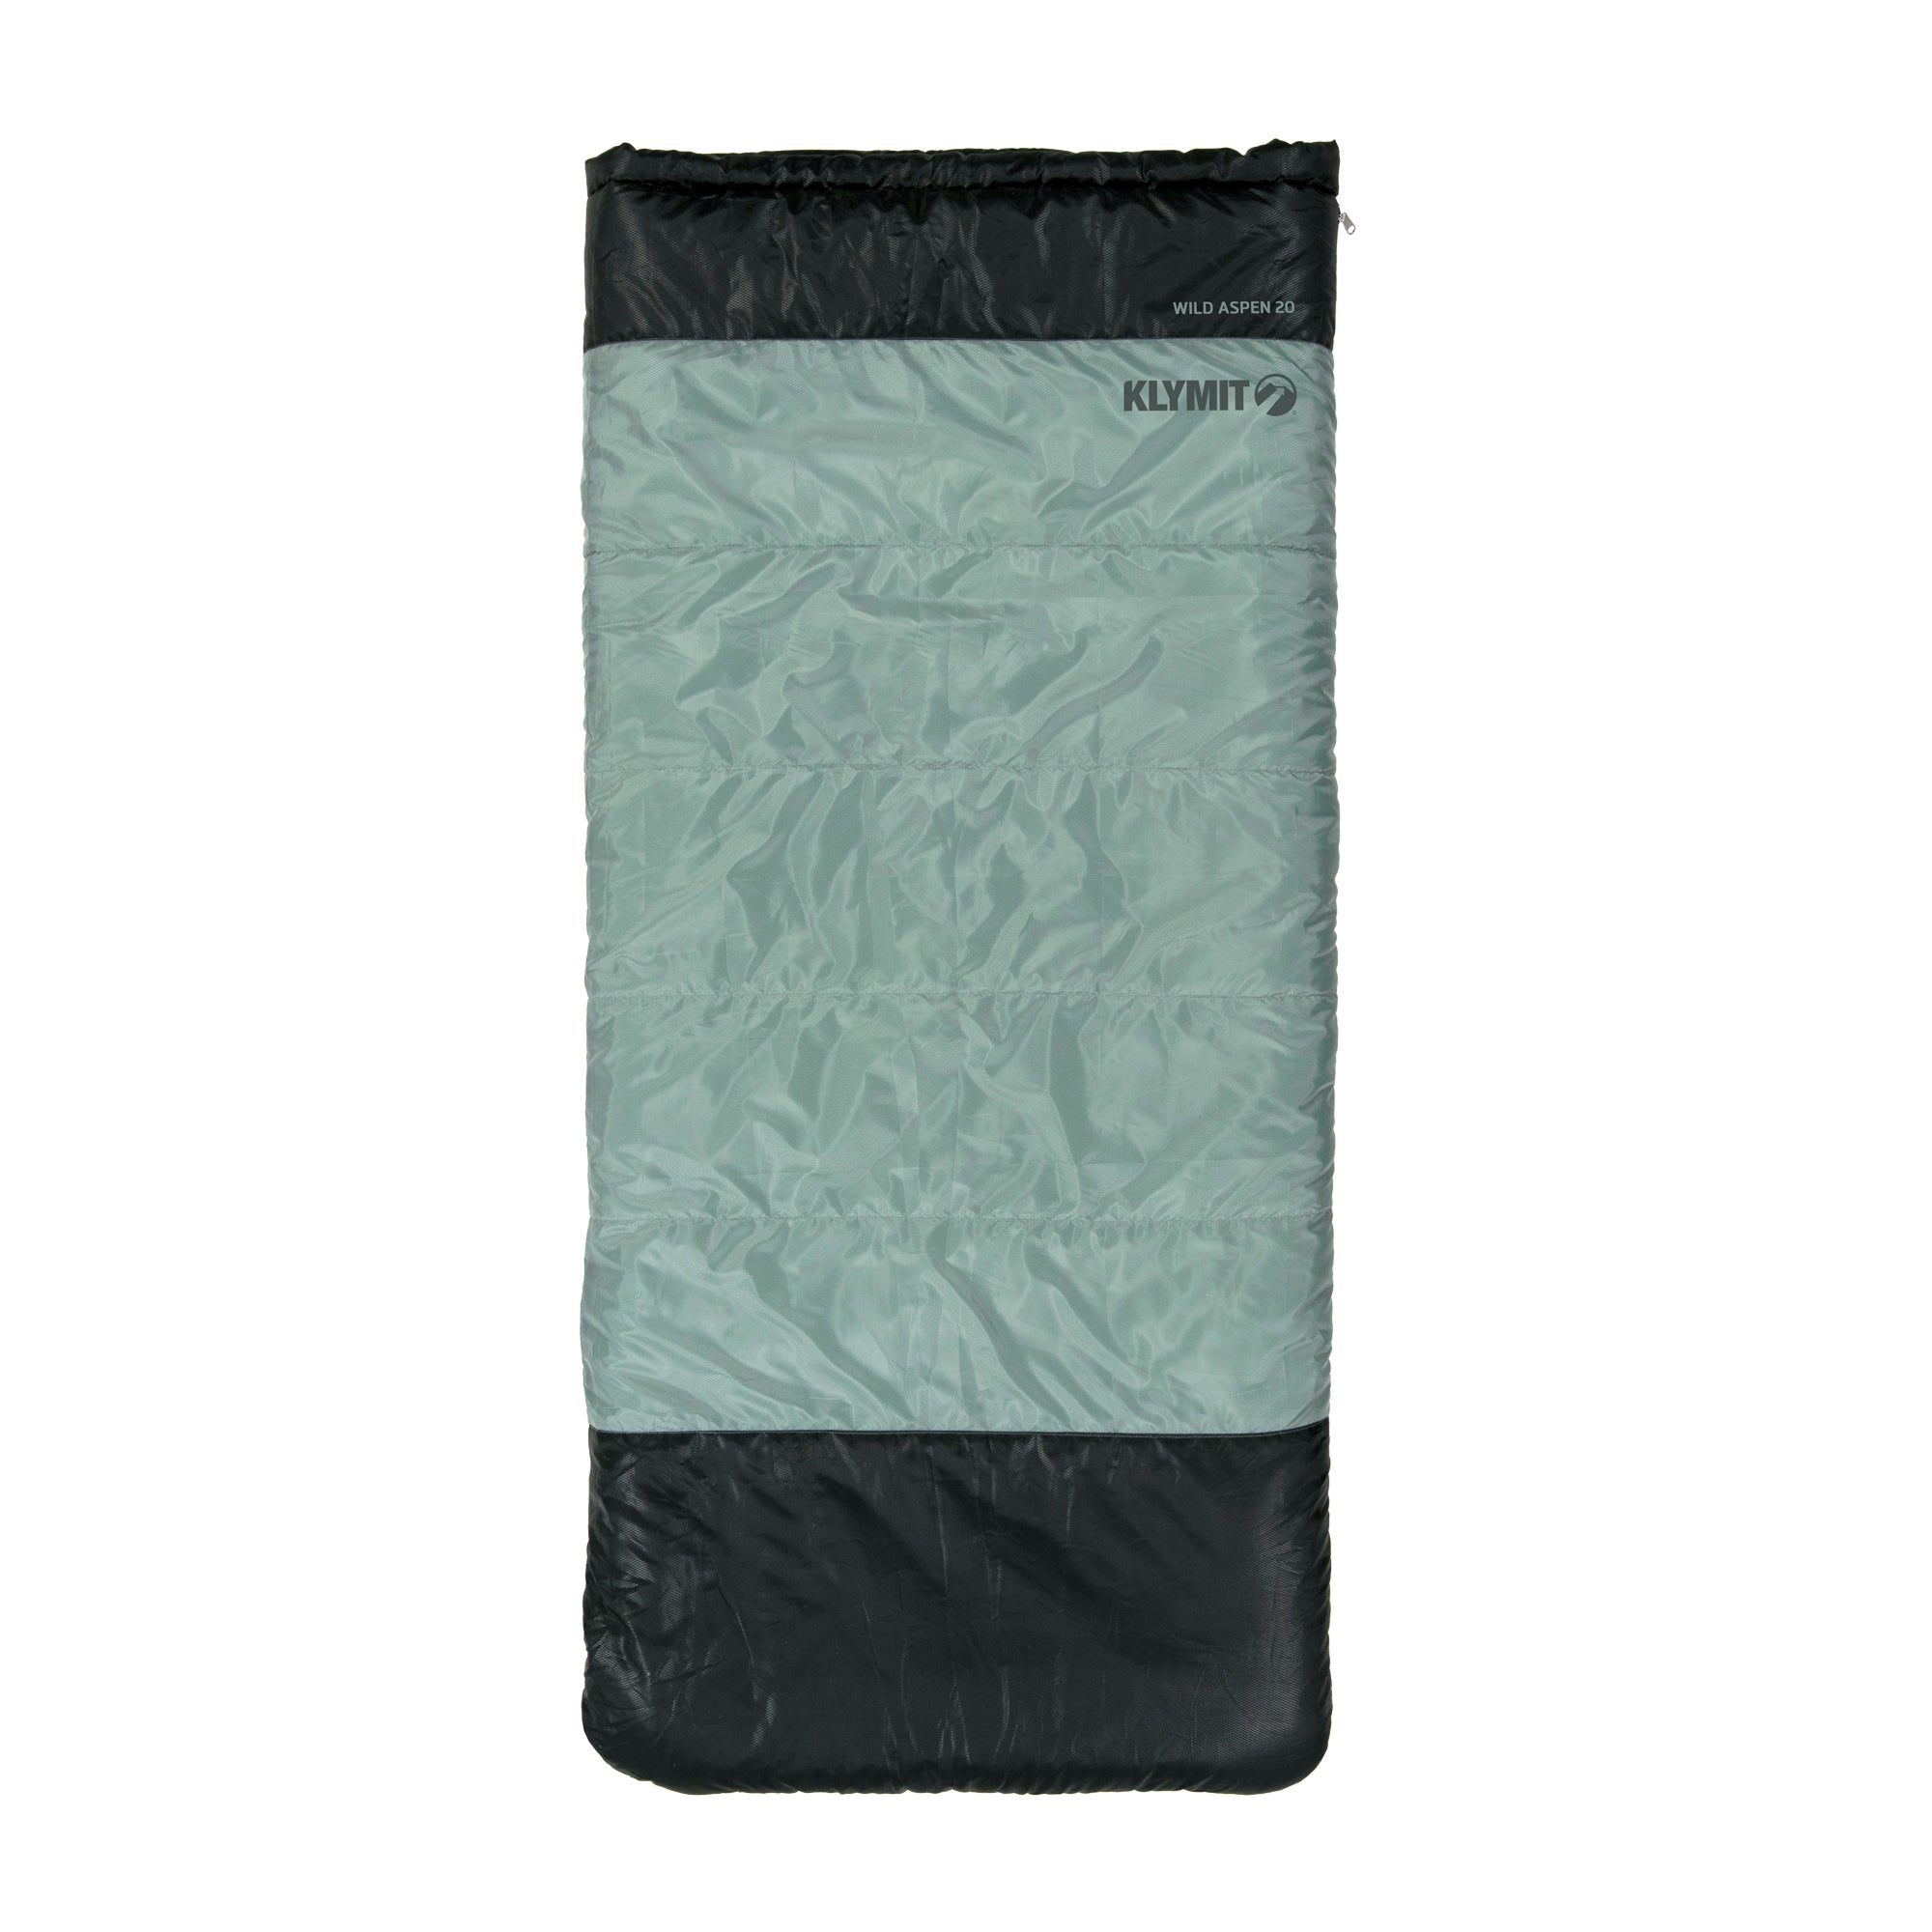 Wild Aspen 20 Rectangle Sleeping Bag, Green, Front